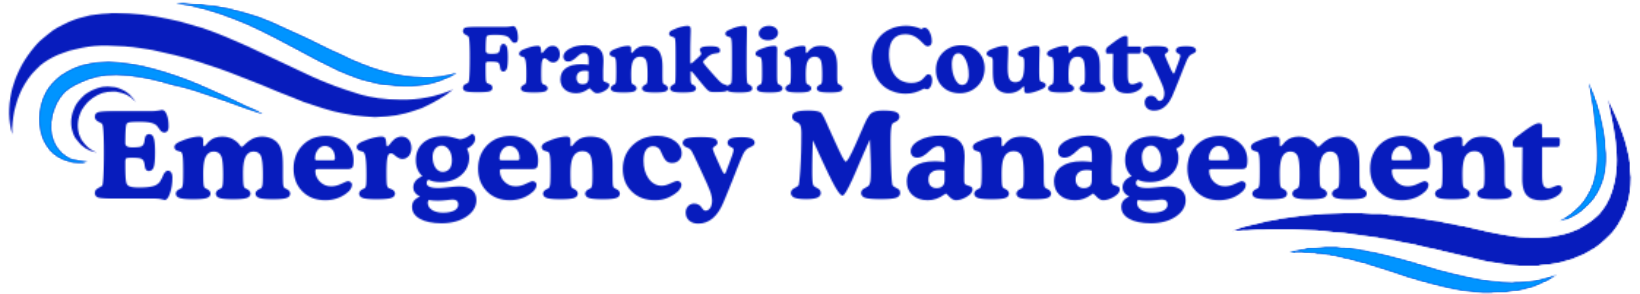 Franklin County Emergency Management